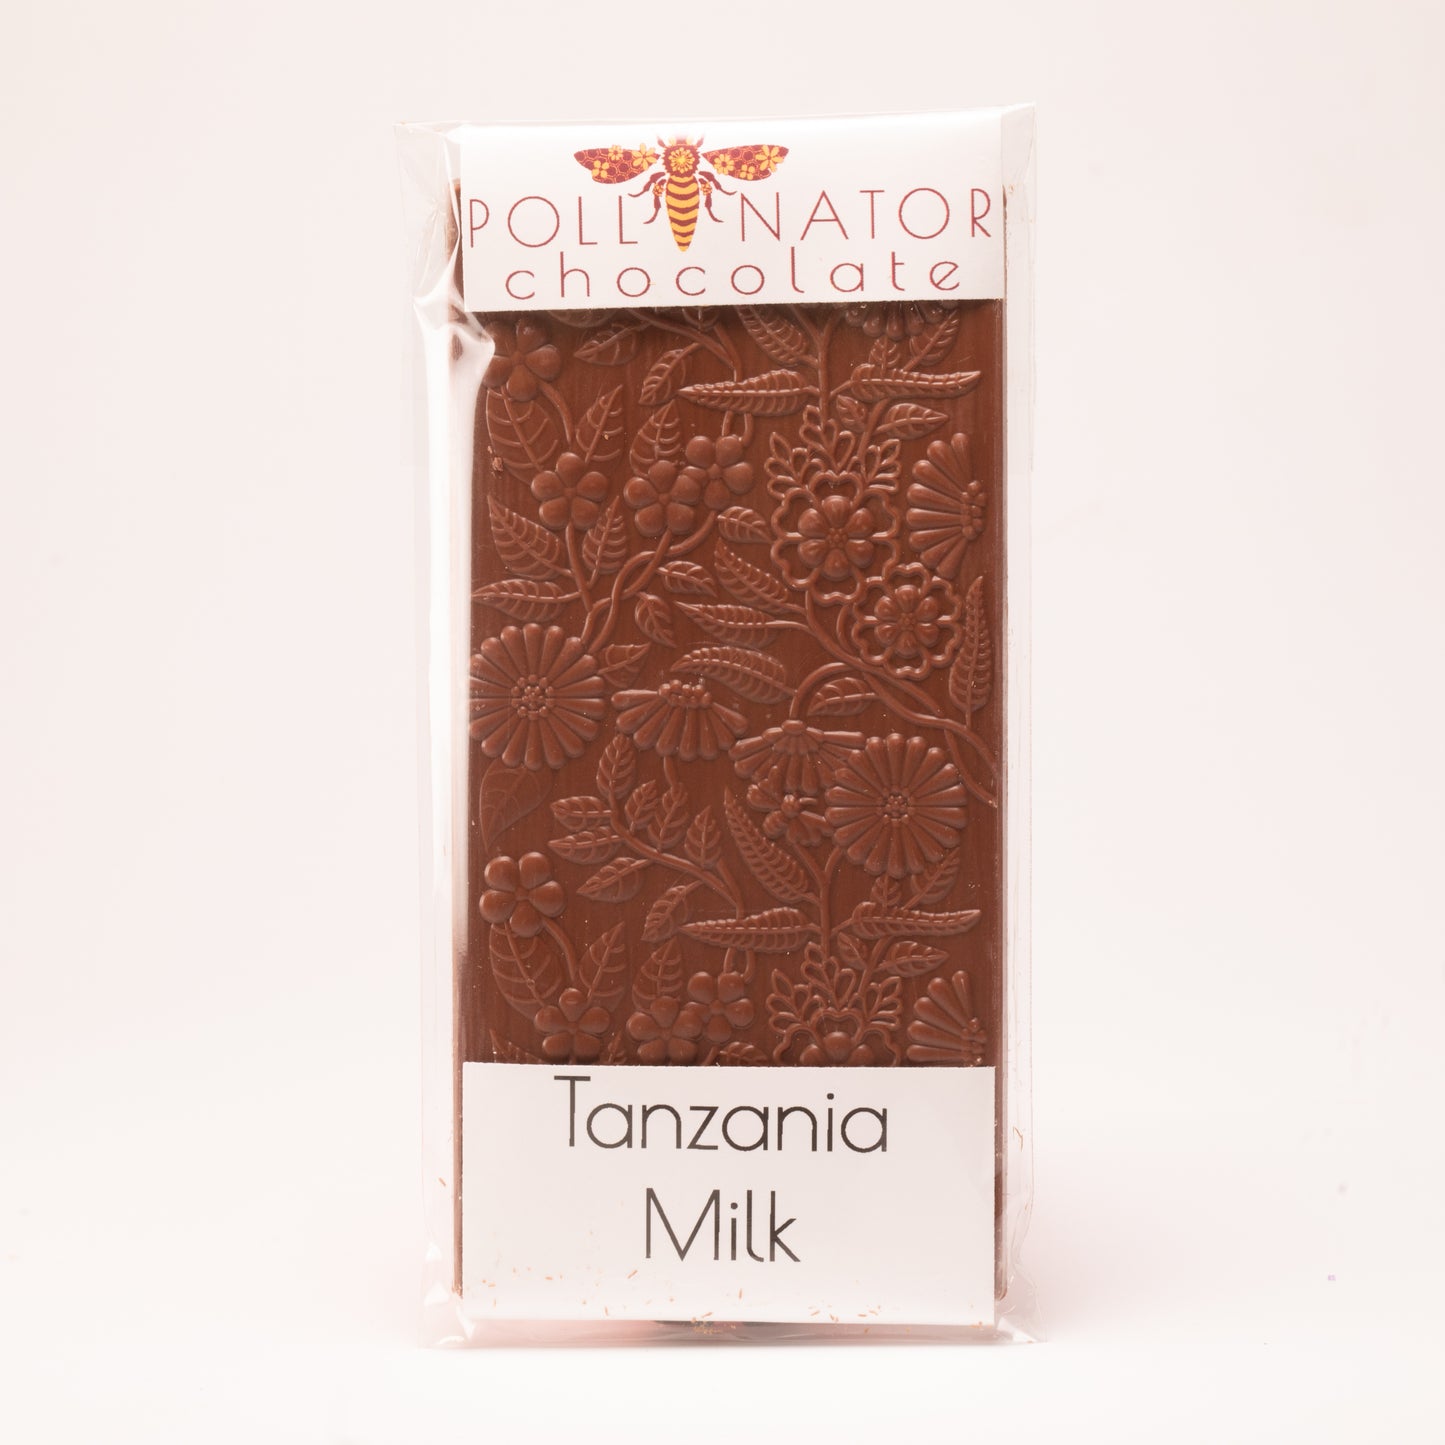 Large Tanzania Milk bar